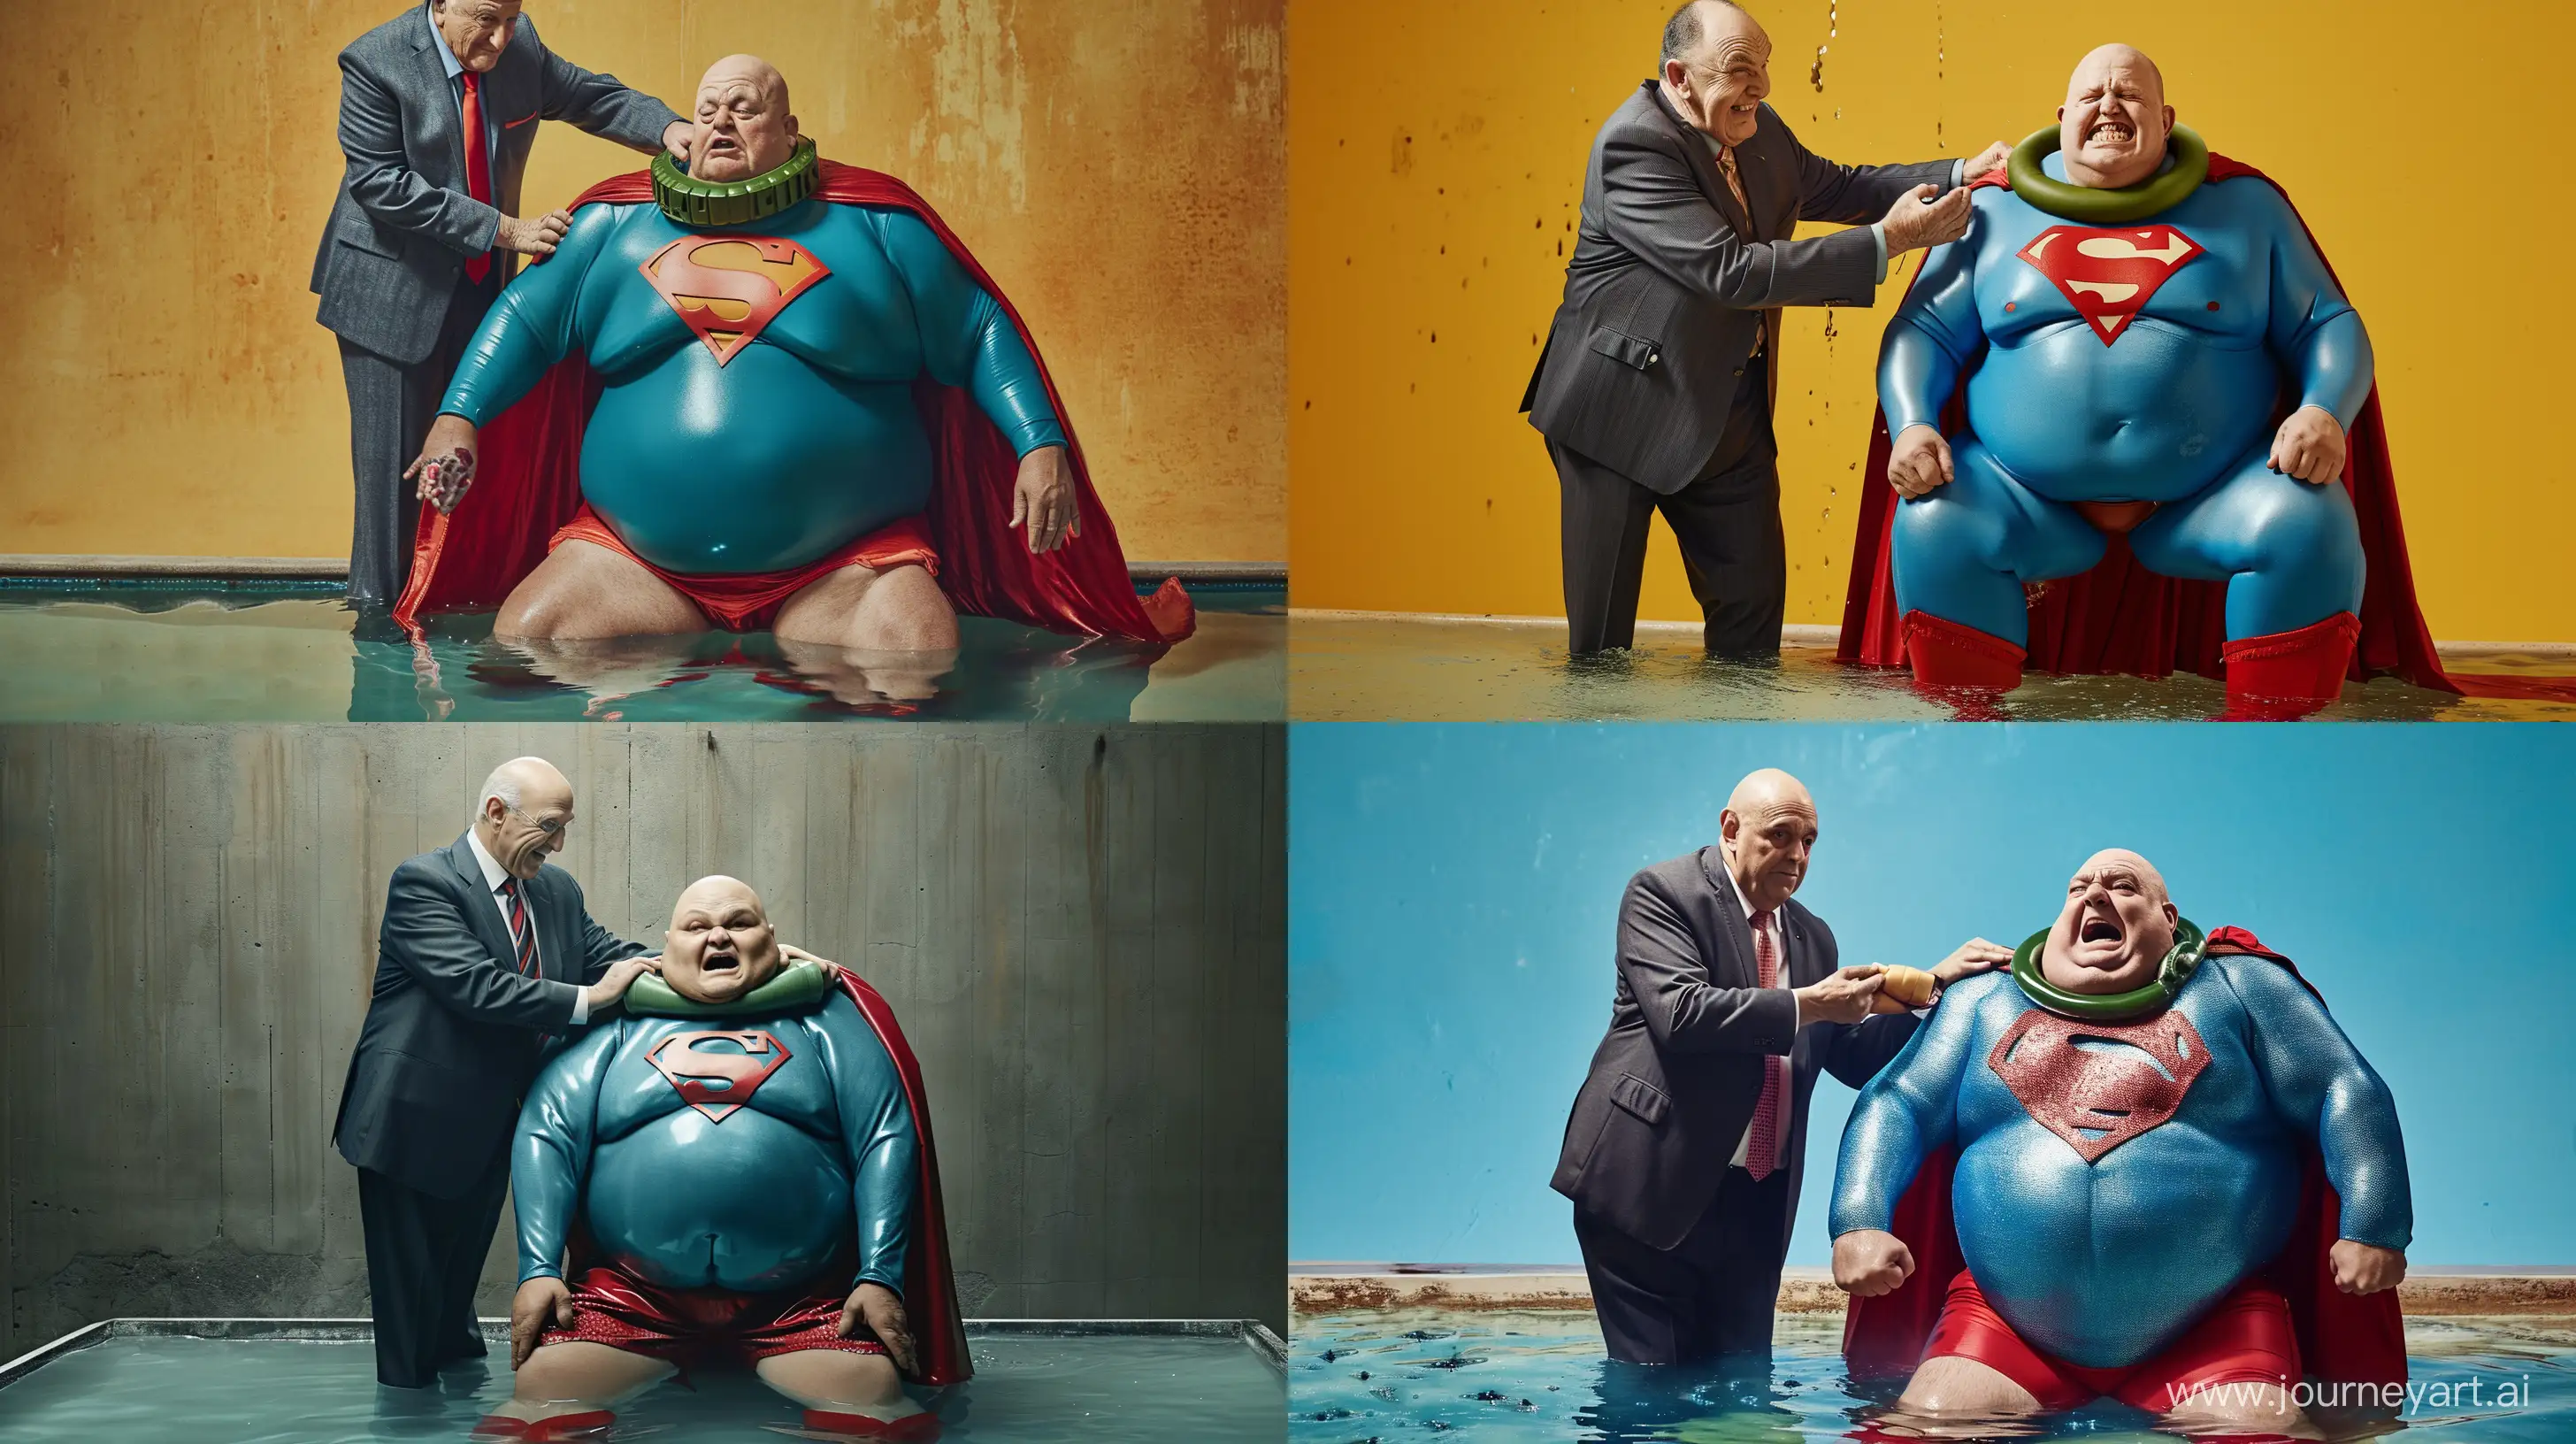 Superman-Confrontation-Elderly-Hero-in-Distress